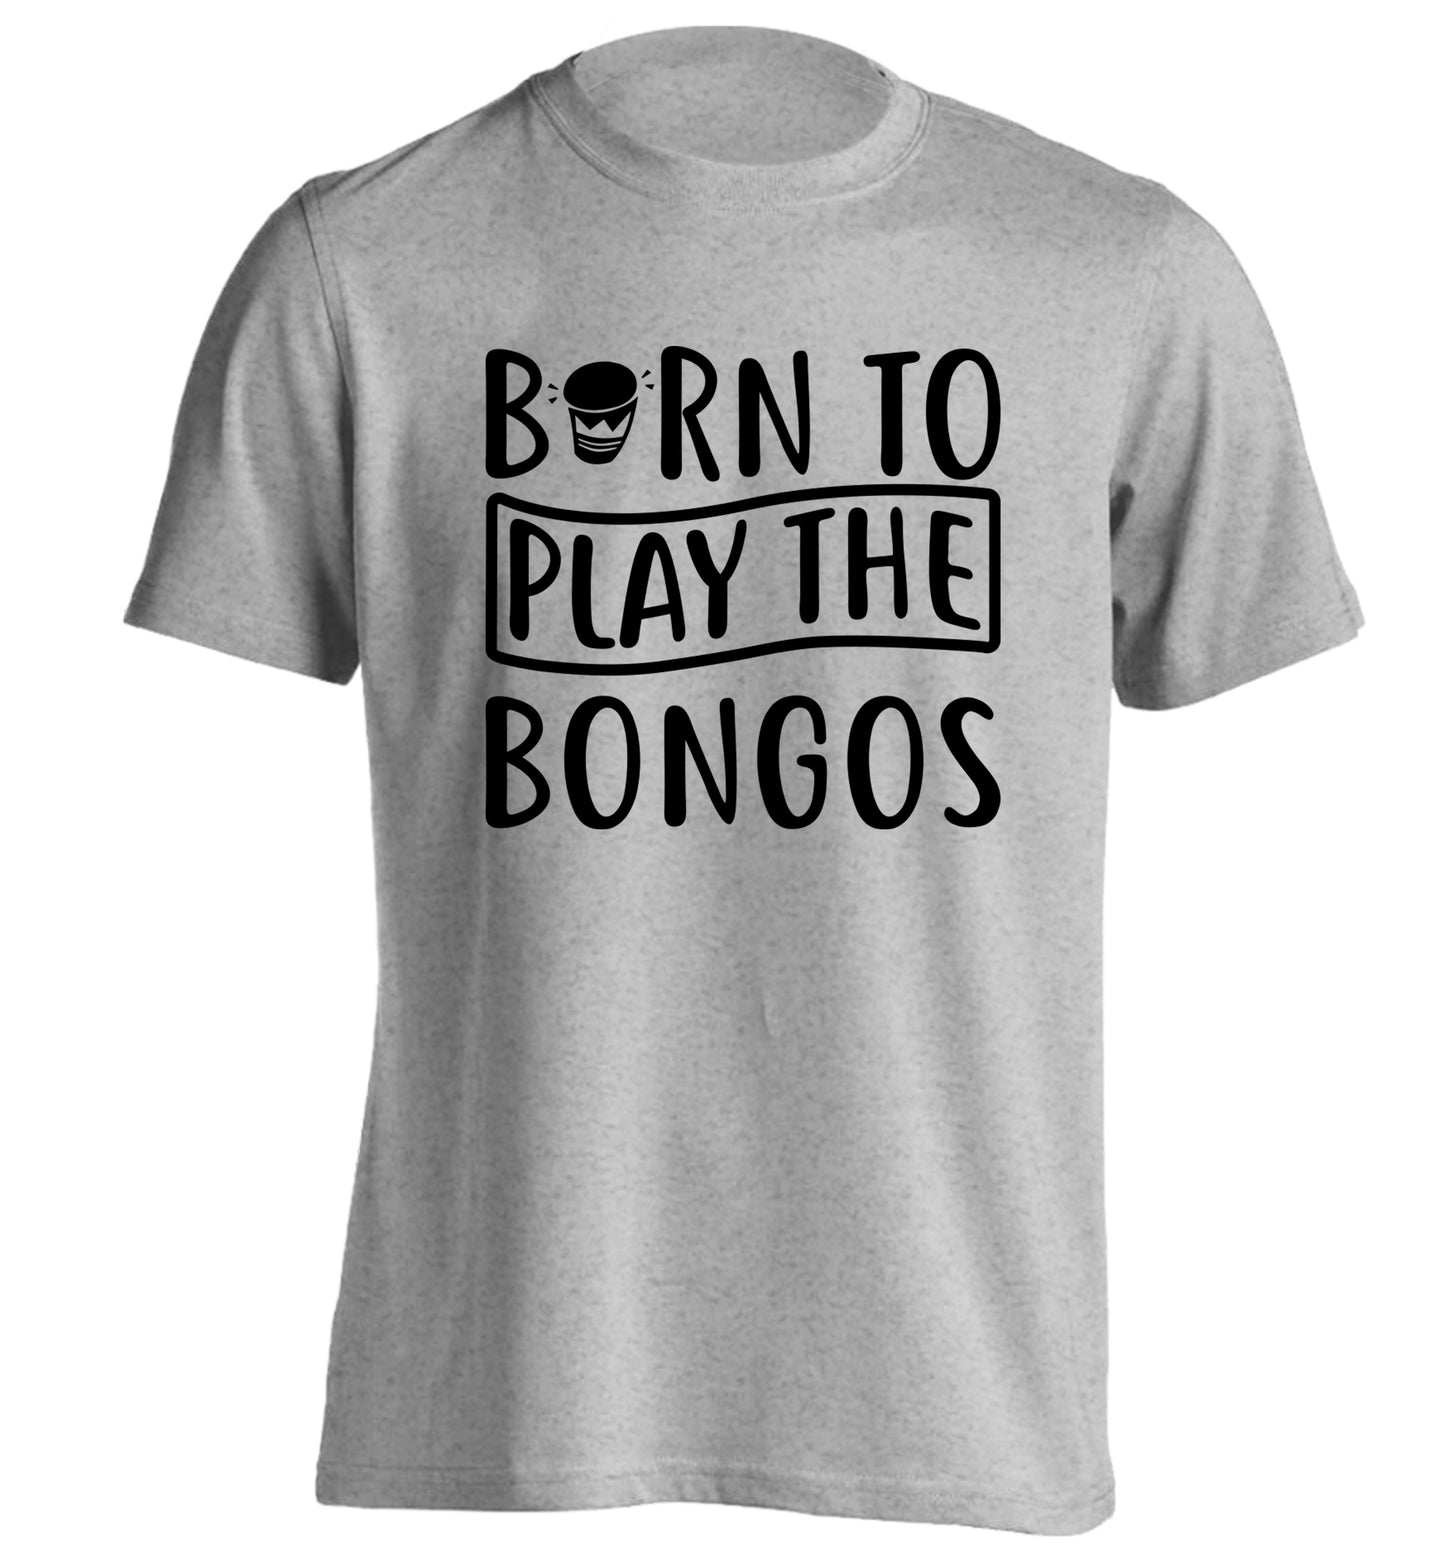 Born to play the bongos adults unisex grey Tshirt 2XL